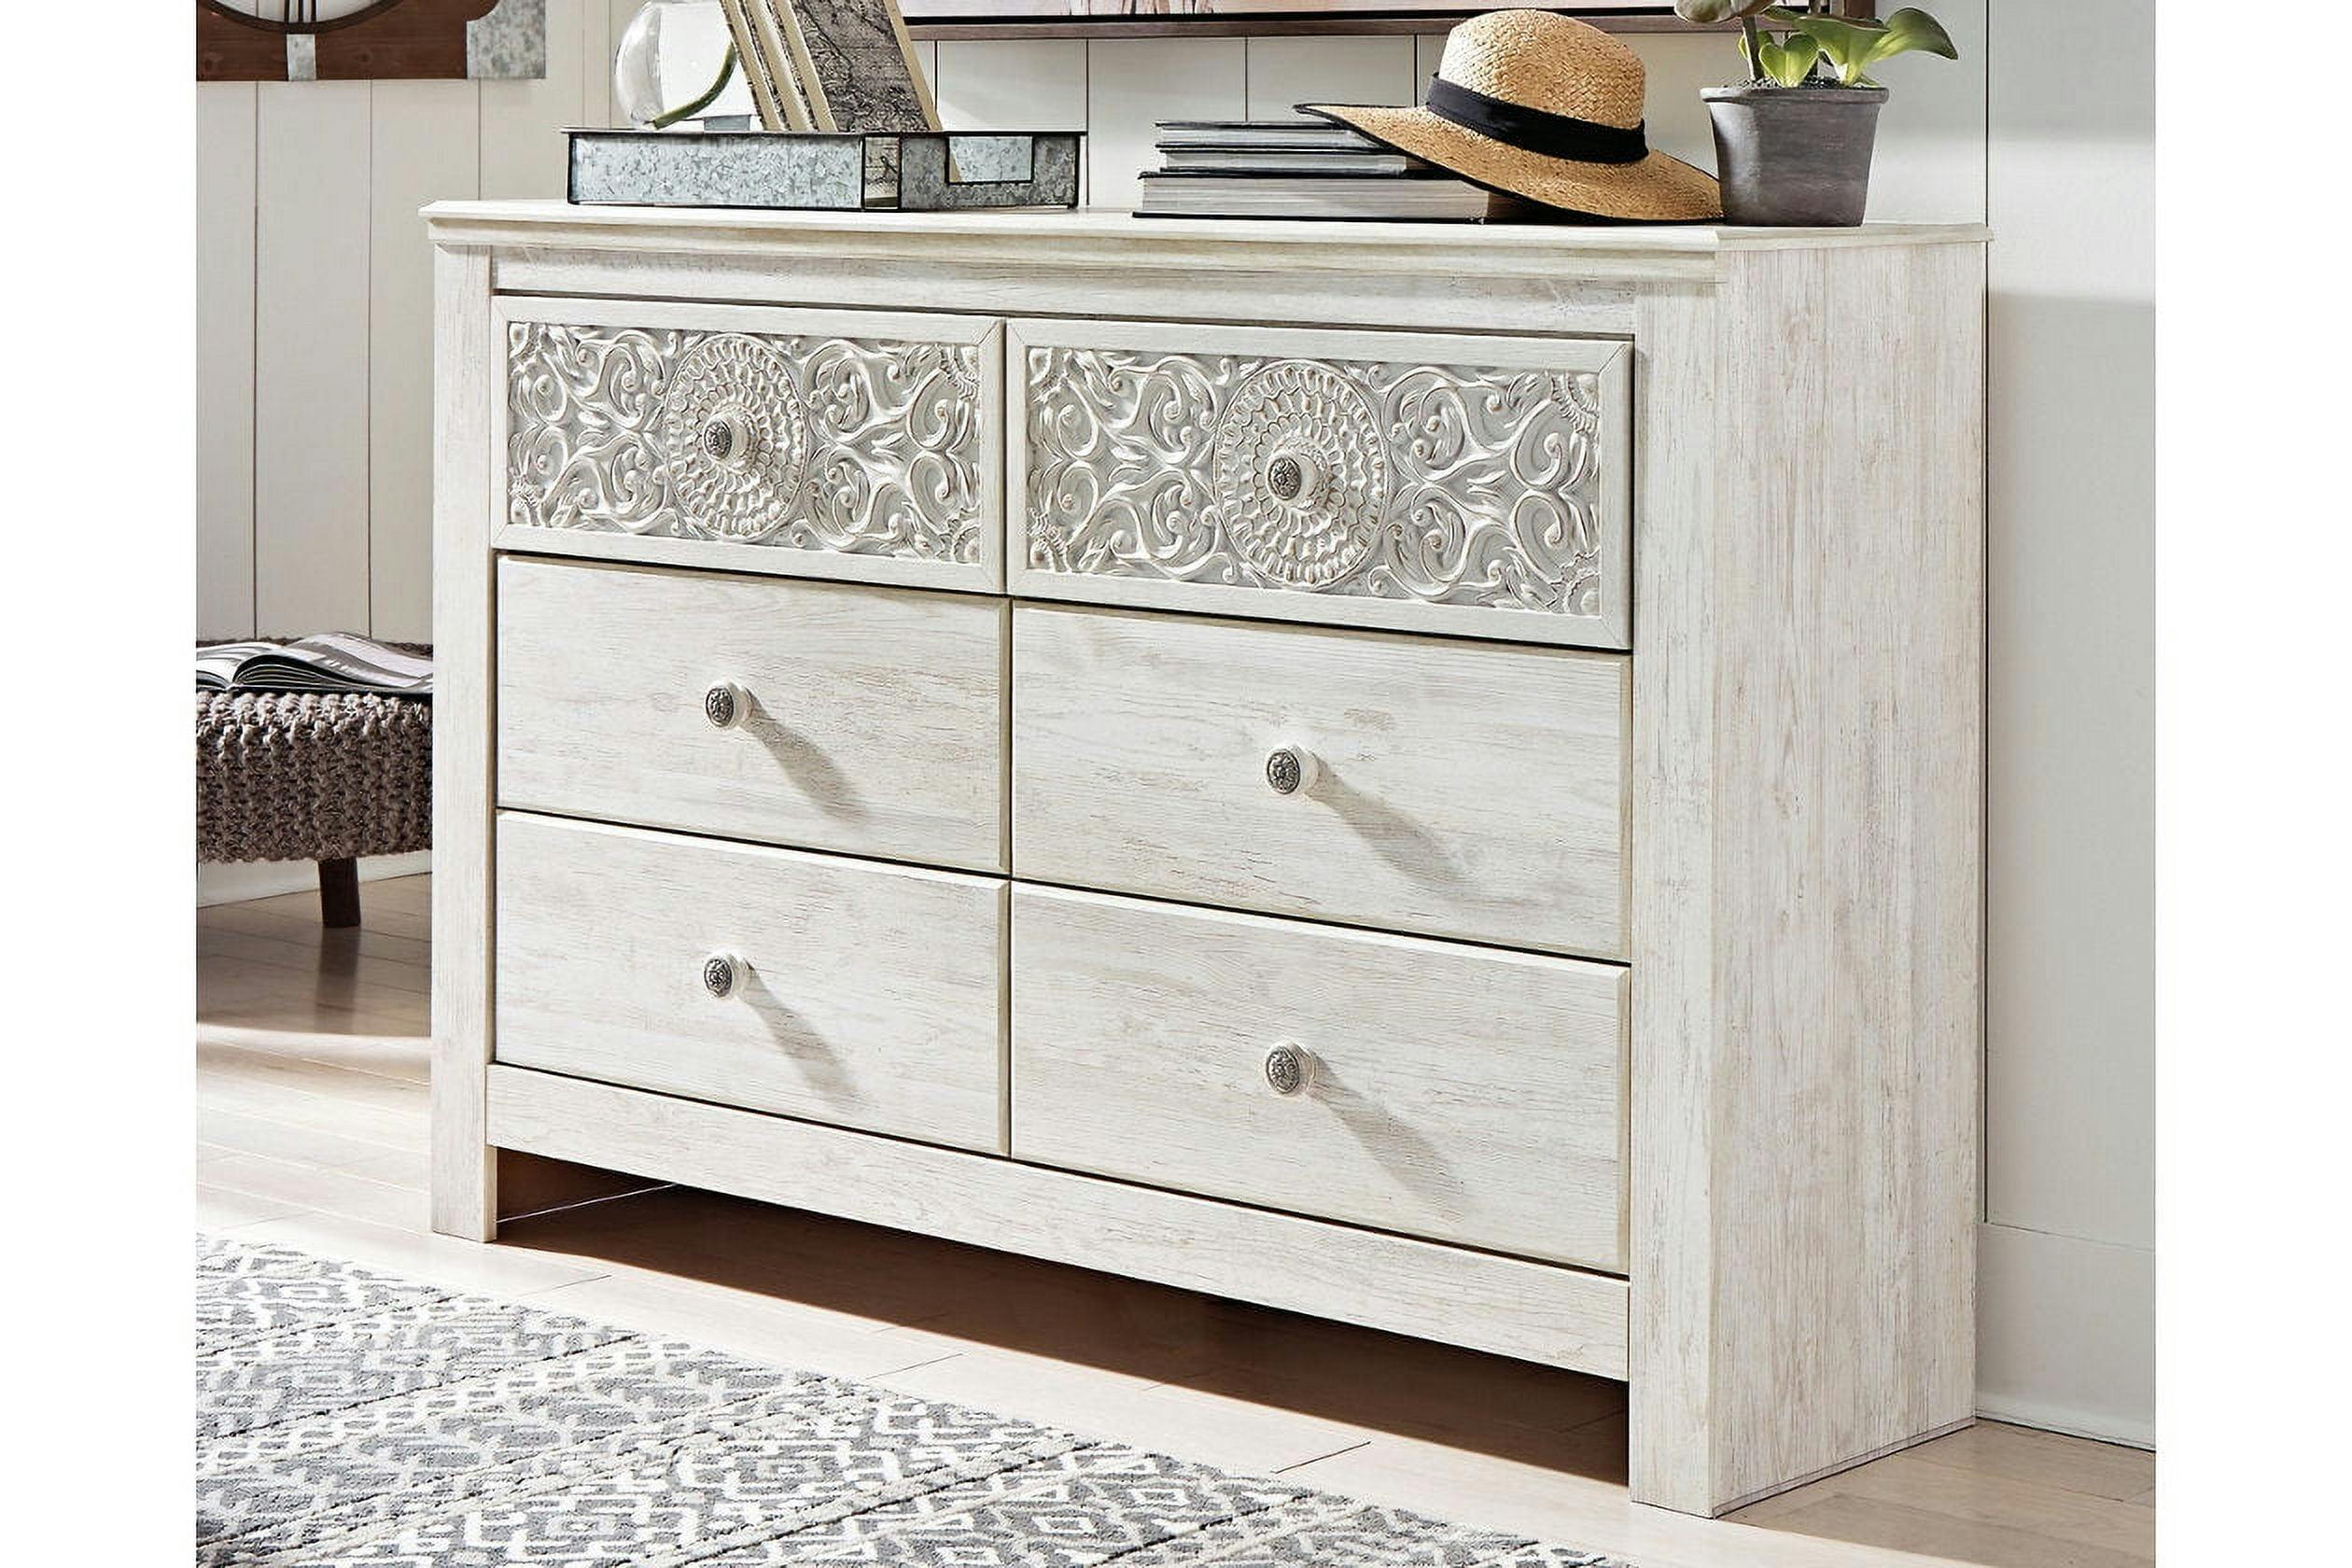 Paxberry Whitewash 6-Drawer Dresser with Medallion Pulls